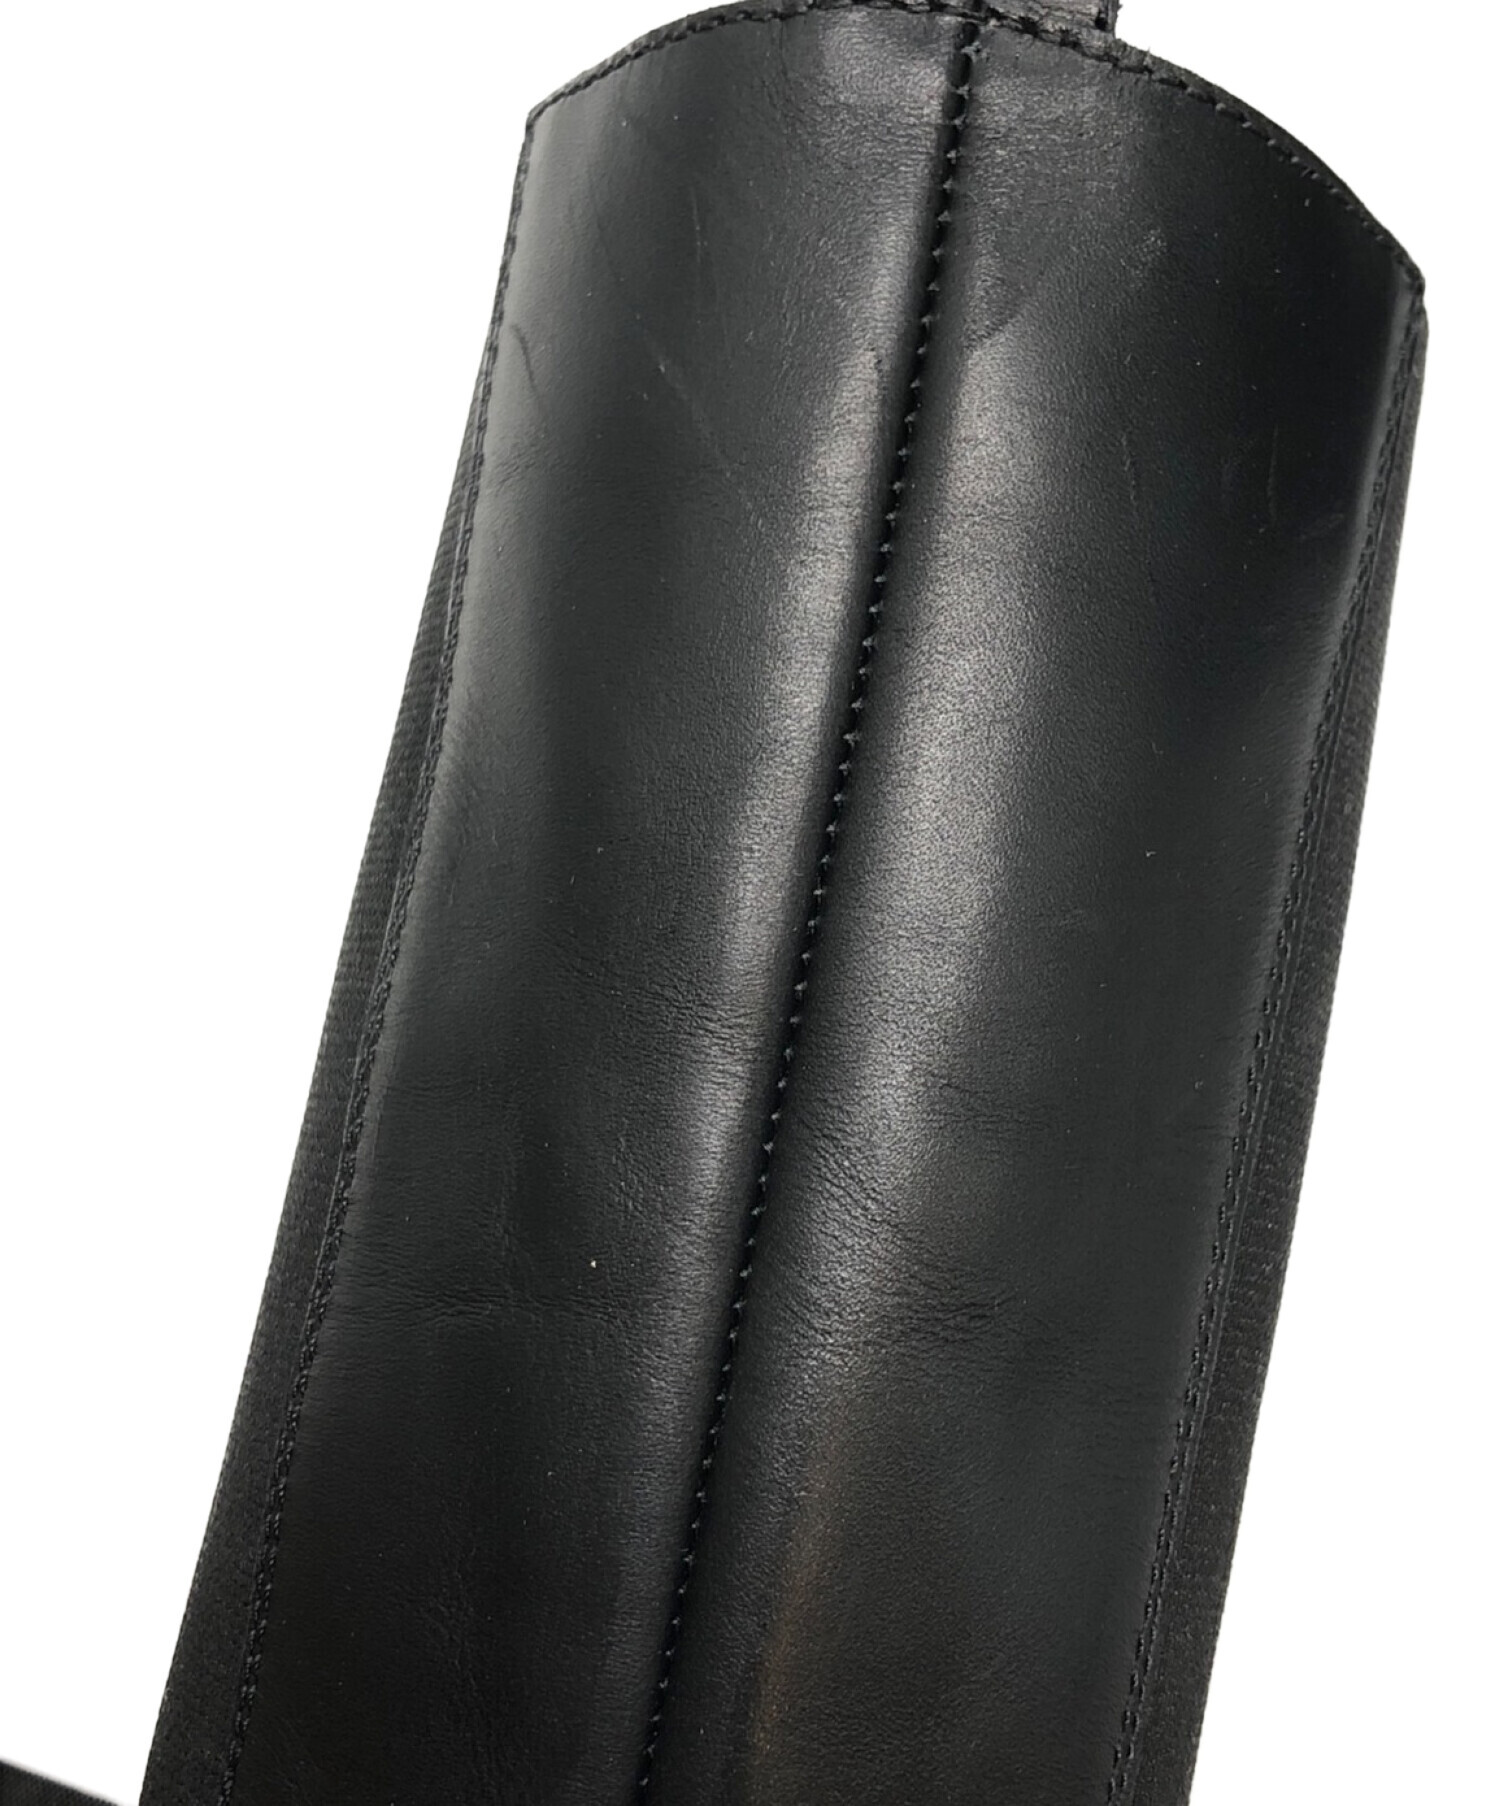 sergio rossi (セルジオロッシ) チャンキーソールサイドゴアブーツ ブラック サイズ:39